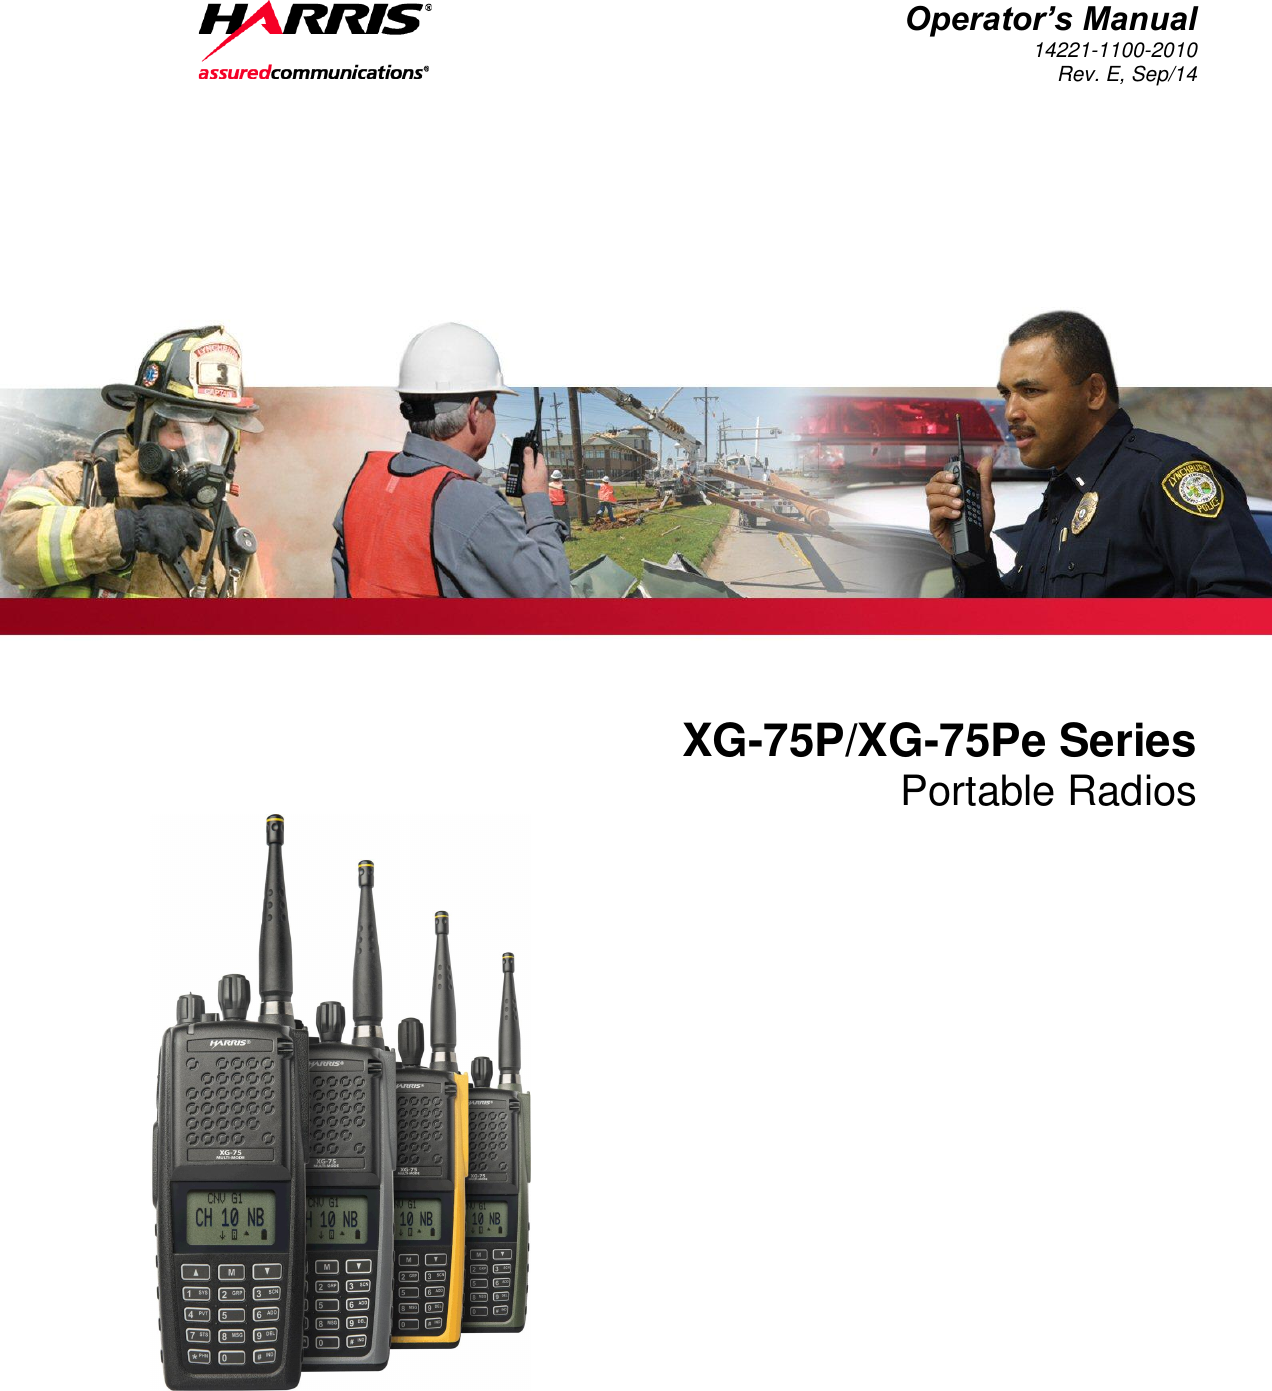  Operator’s Manual 14221-1100-2010 Rev. E, Sep/14    XG-75P/XG-75Pe Series Portable Radios   